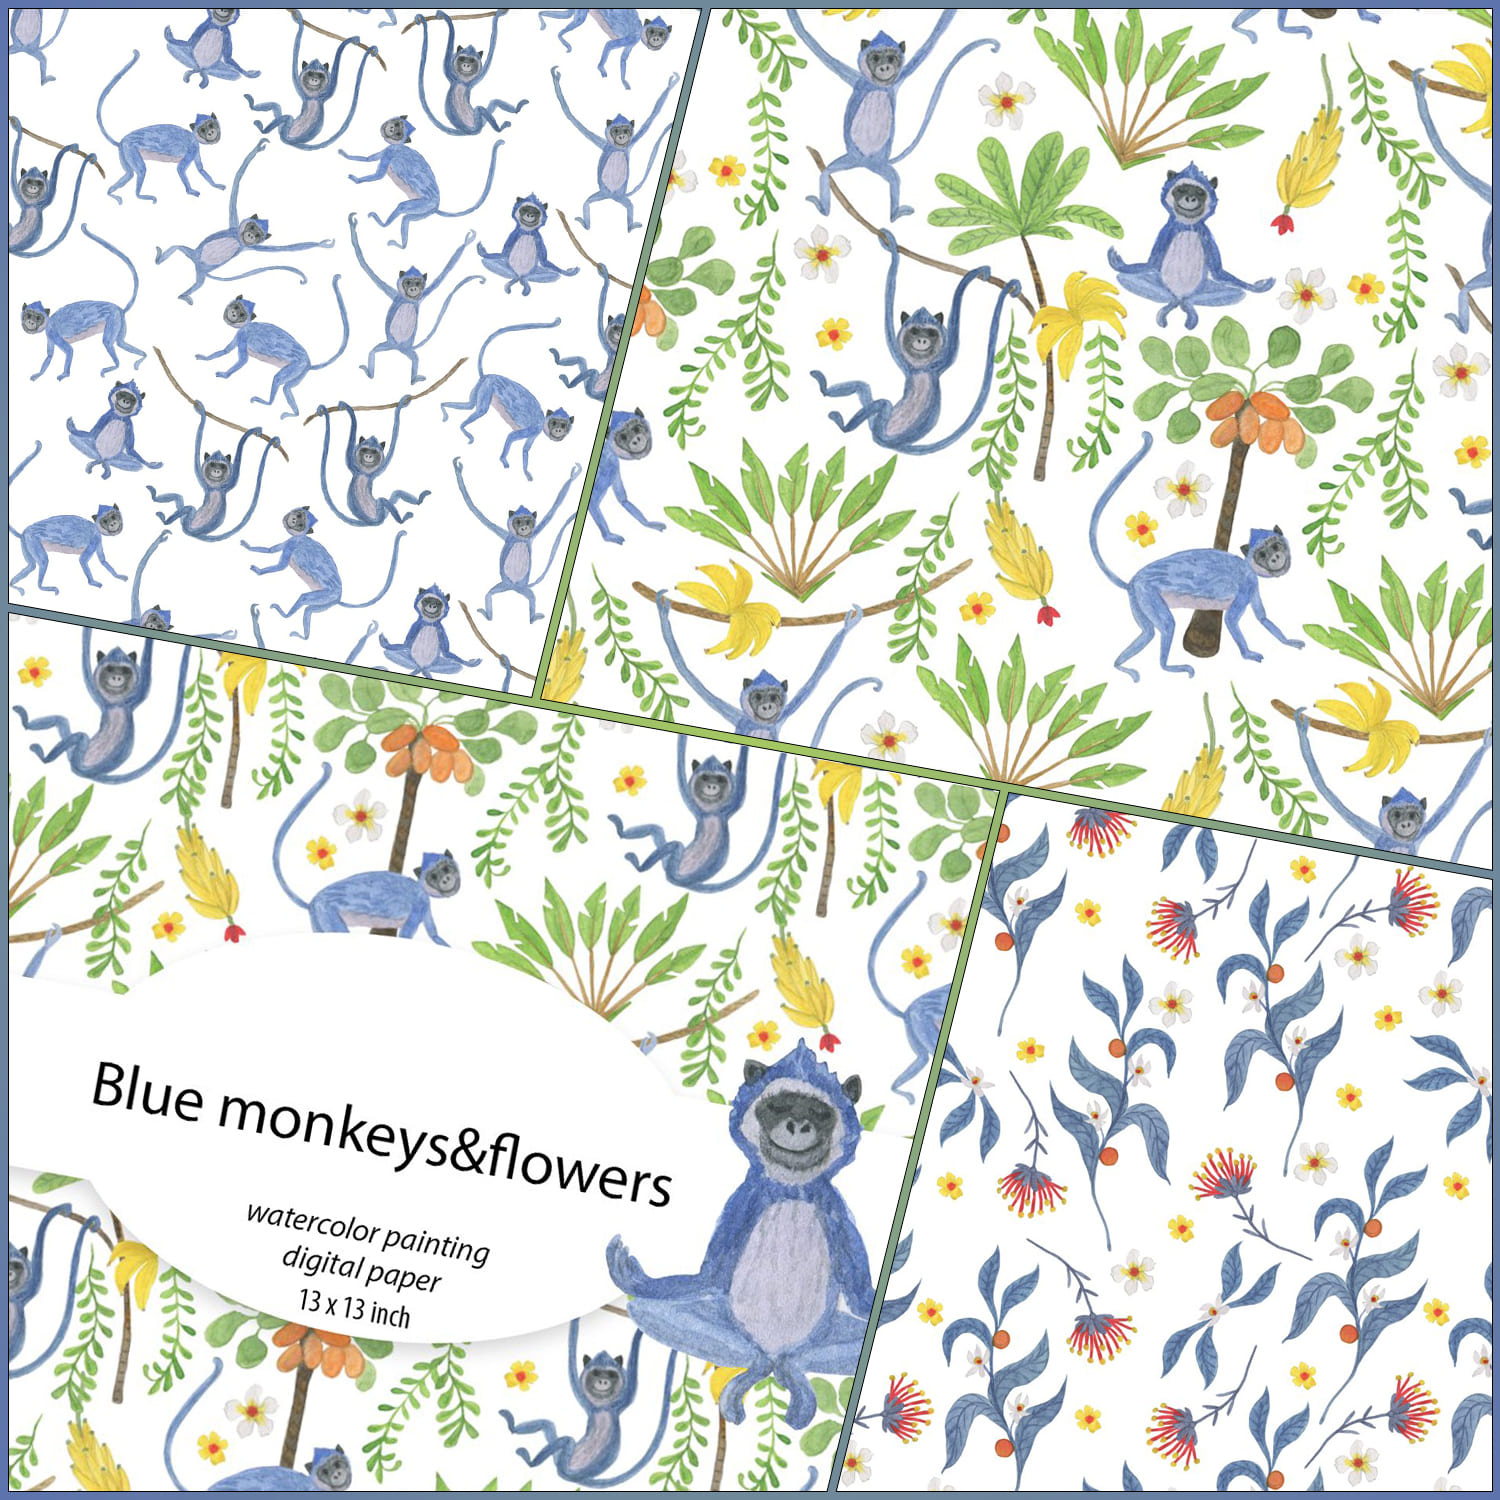 Blue monkeys - watercolor patterns cover.